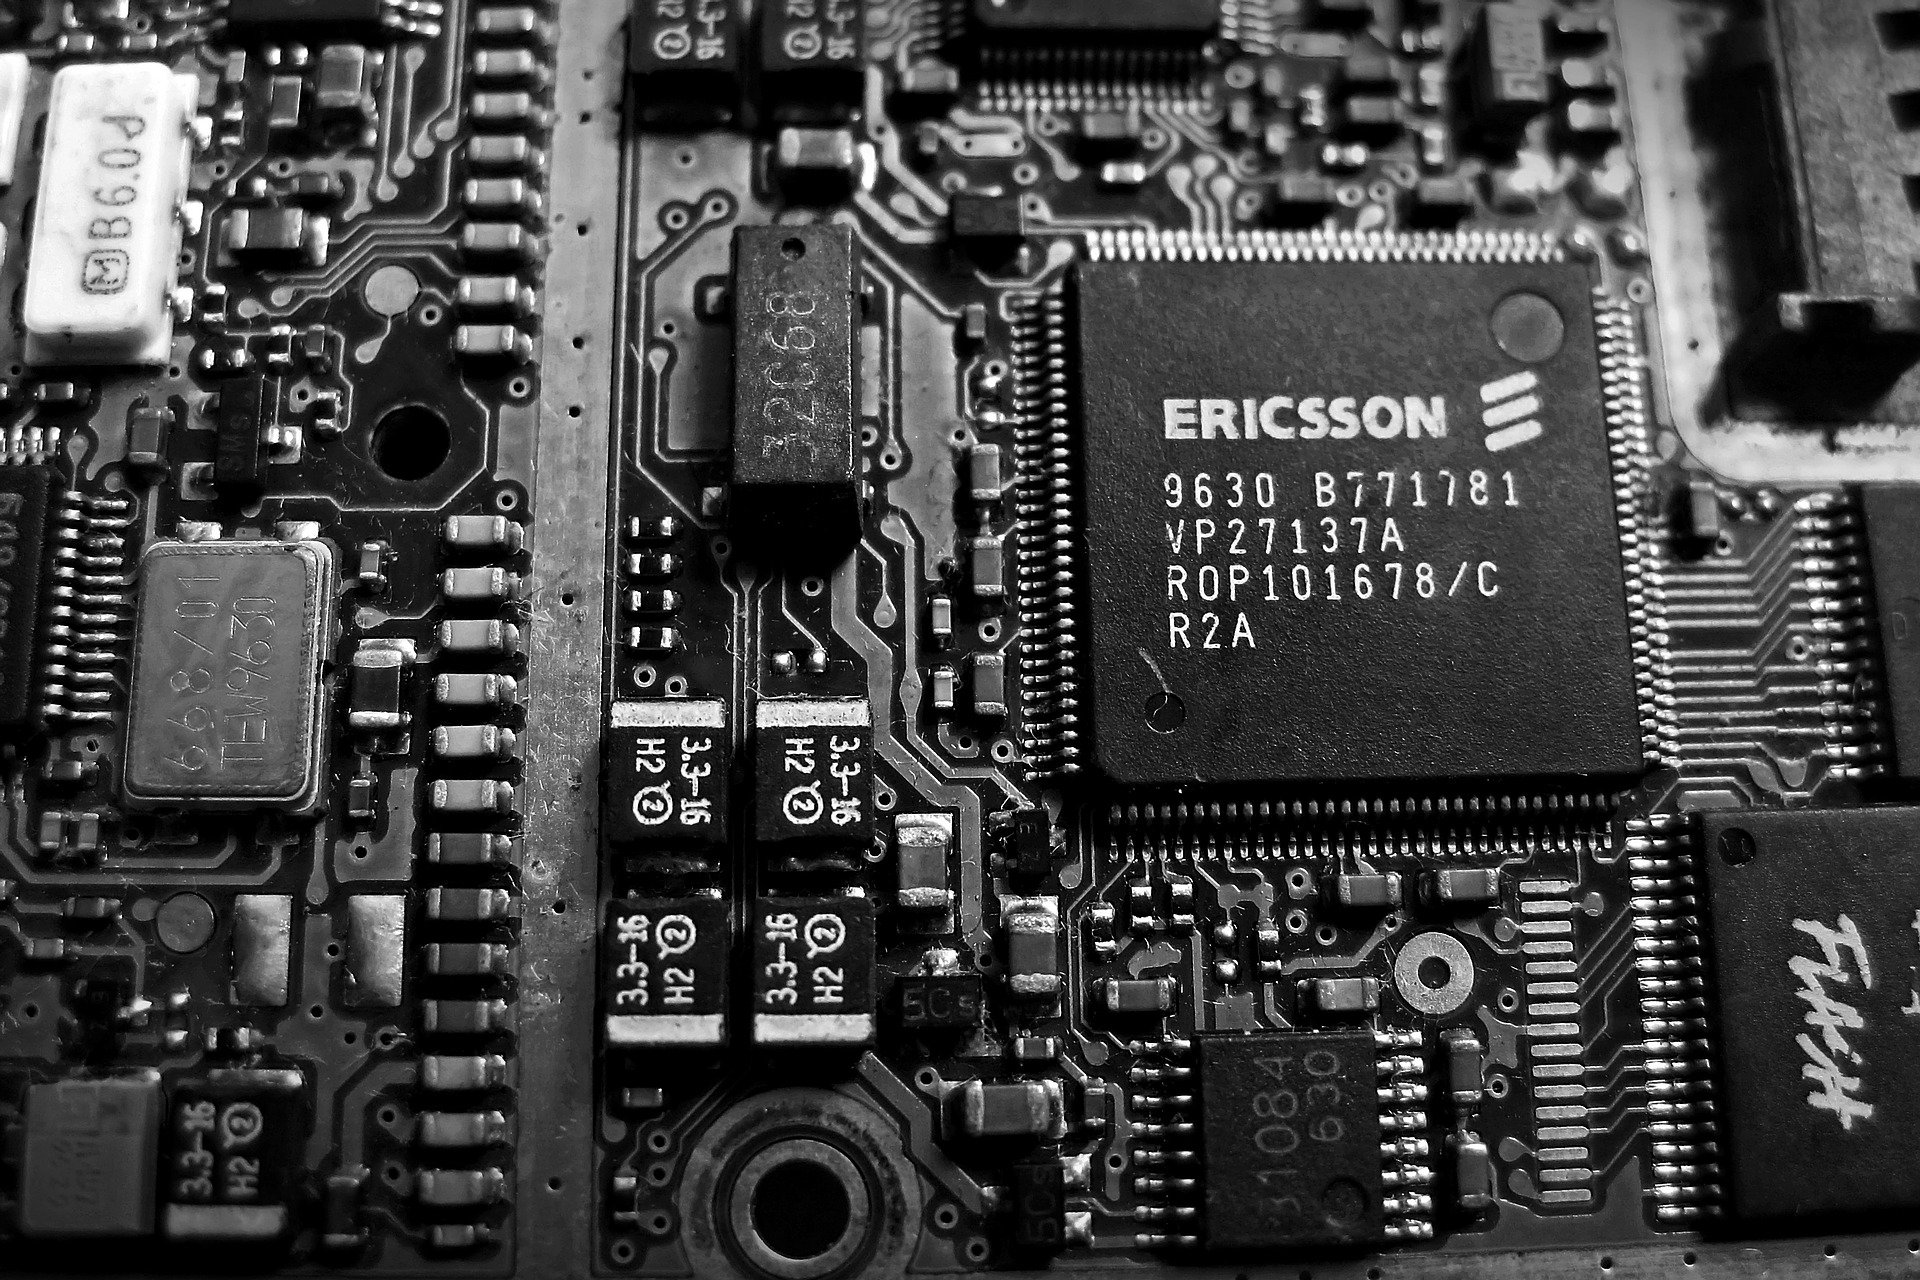 Tele2 has installed 25 000 of the latest Ericsson base stations